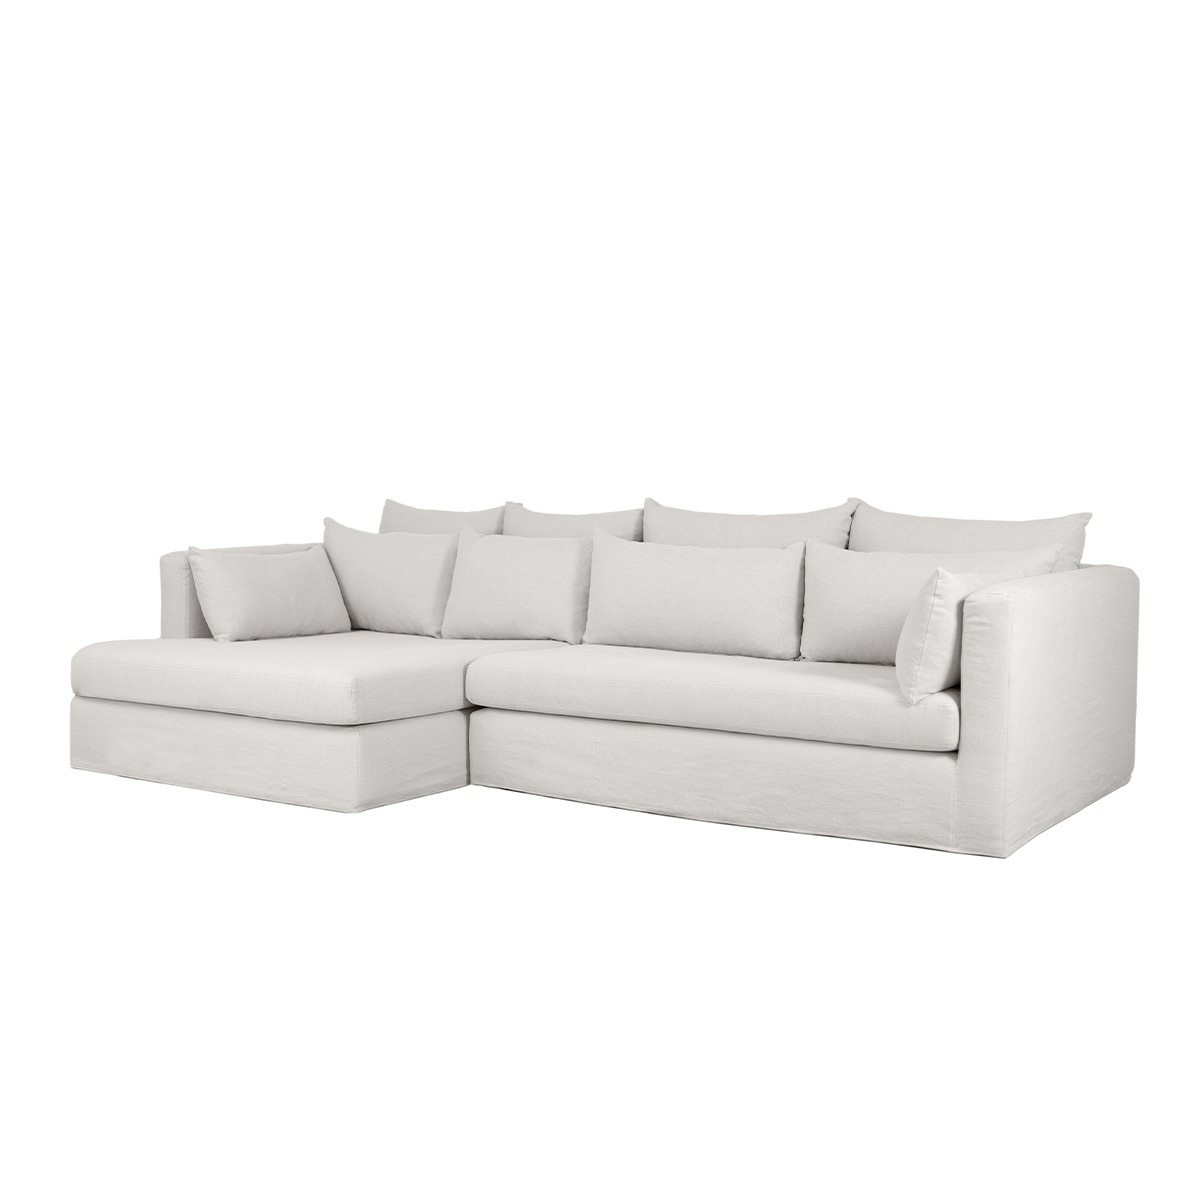 SuperBox corner sofa - Left angle, L335 x P180 x H85 cm - Linen - image 2